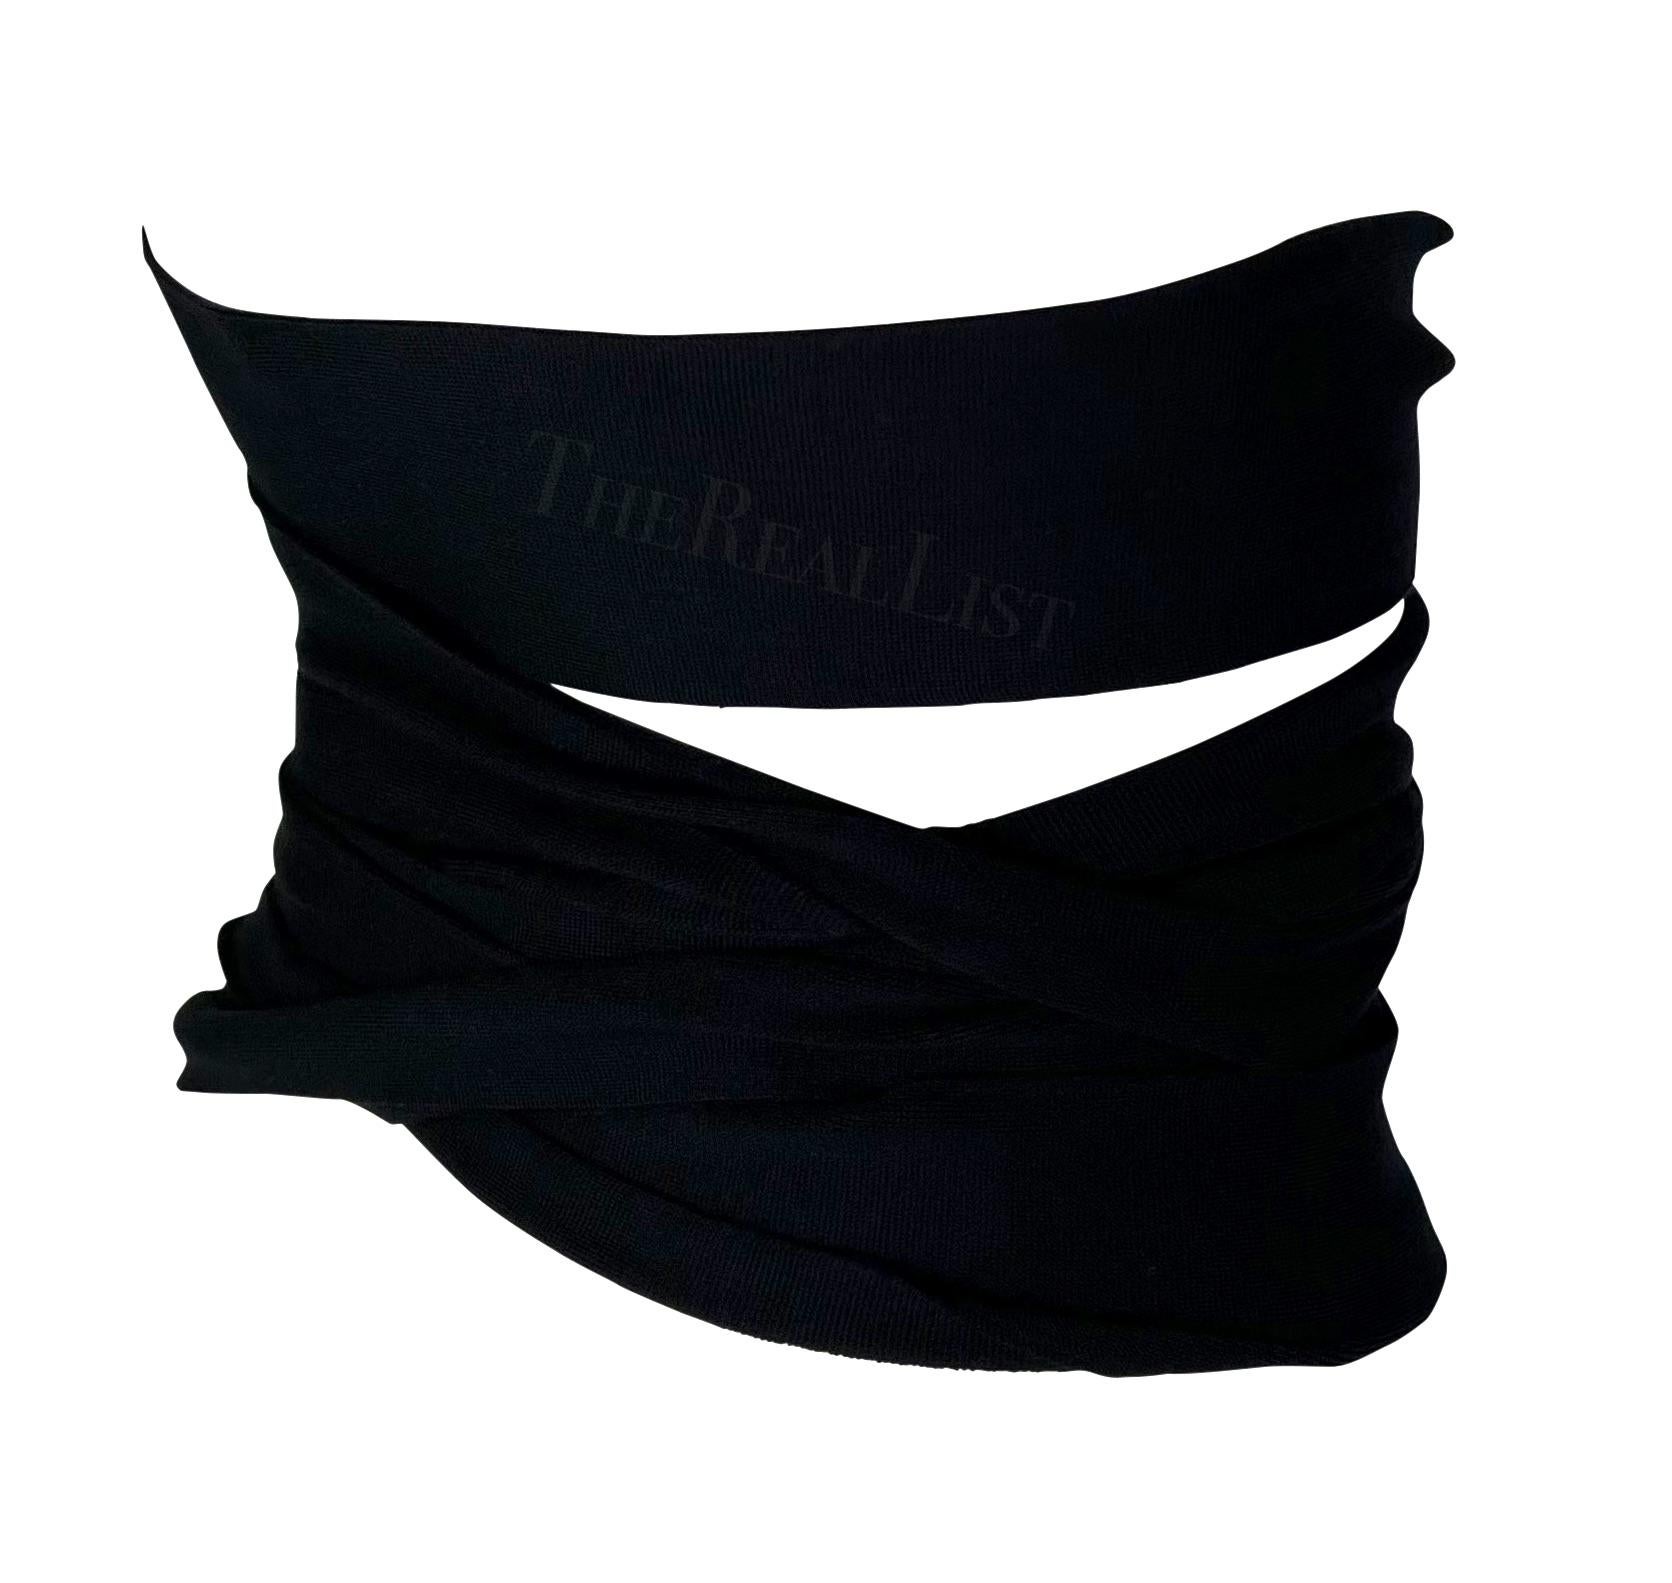 S/S 2001 Yves Saint Laurent by Tom Ford Black Bandage Corset Waist Belt Top For Sale 3